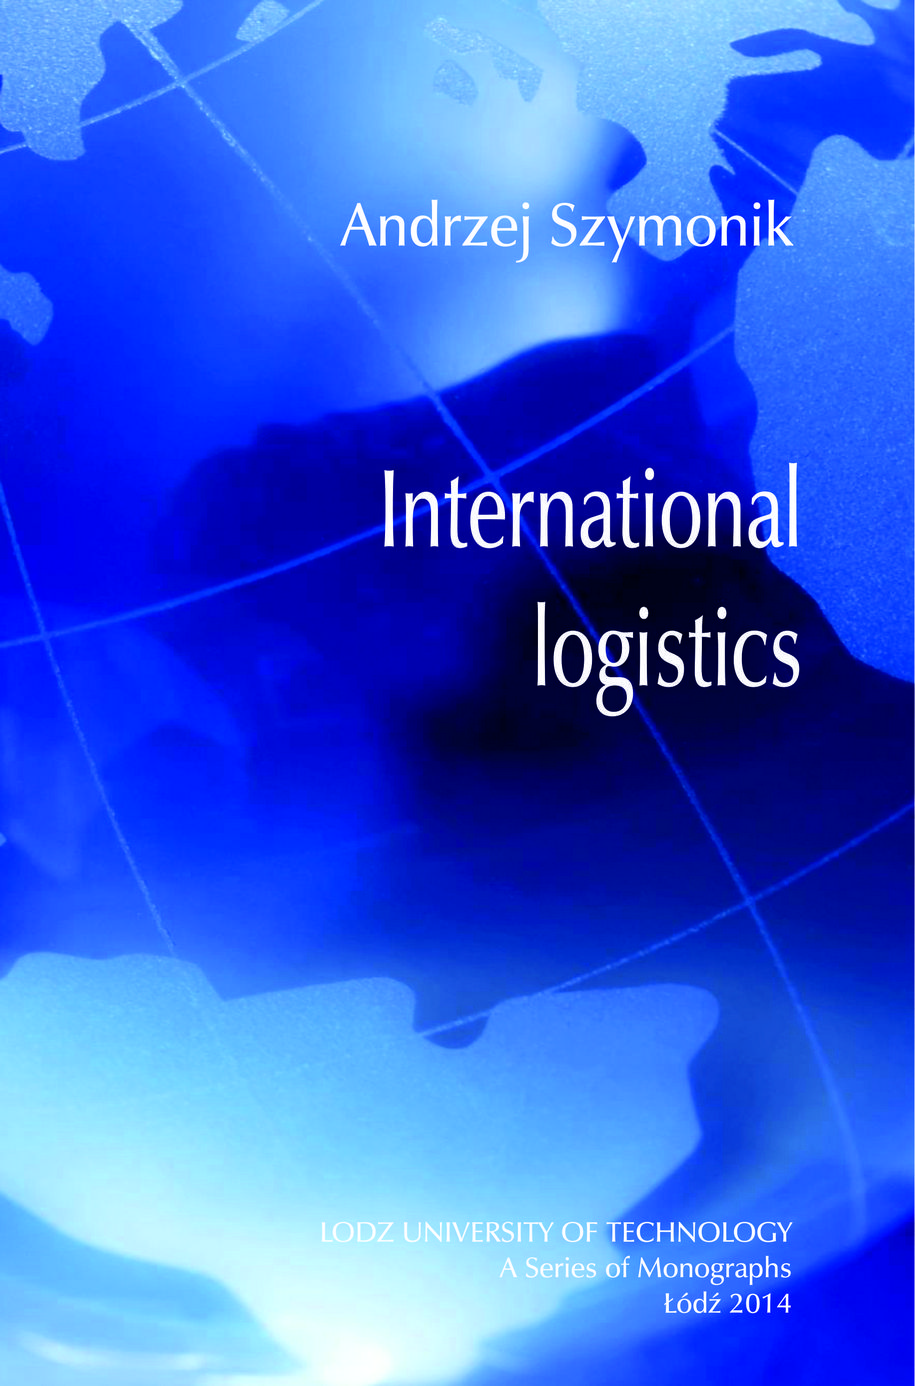 ZESTAW: International logistics (2014) oraz Security in logistic systems (2014)